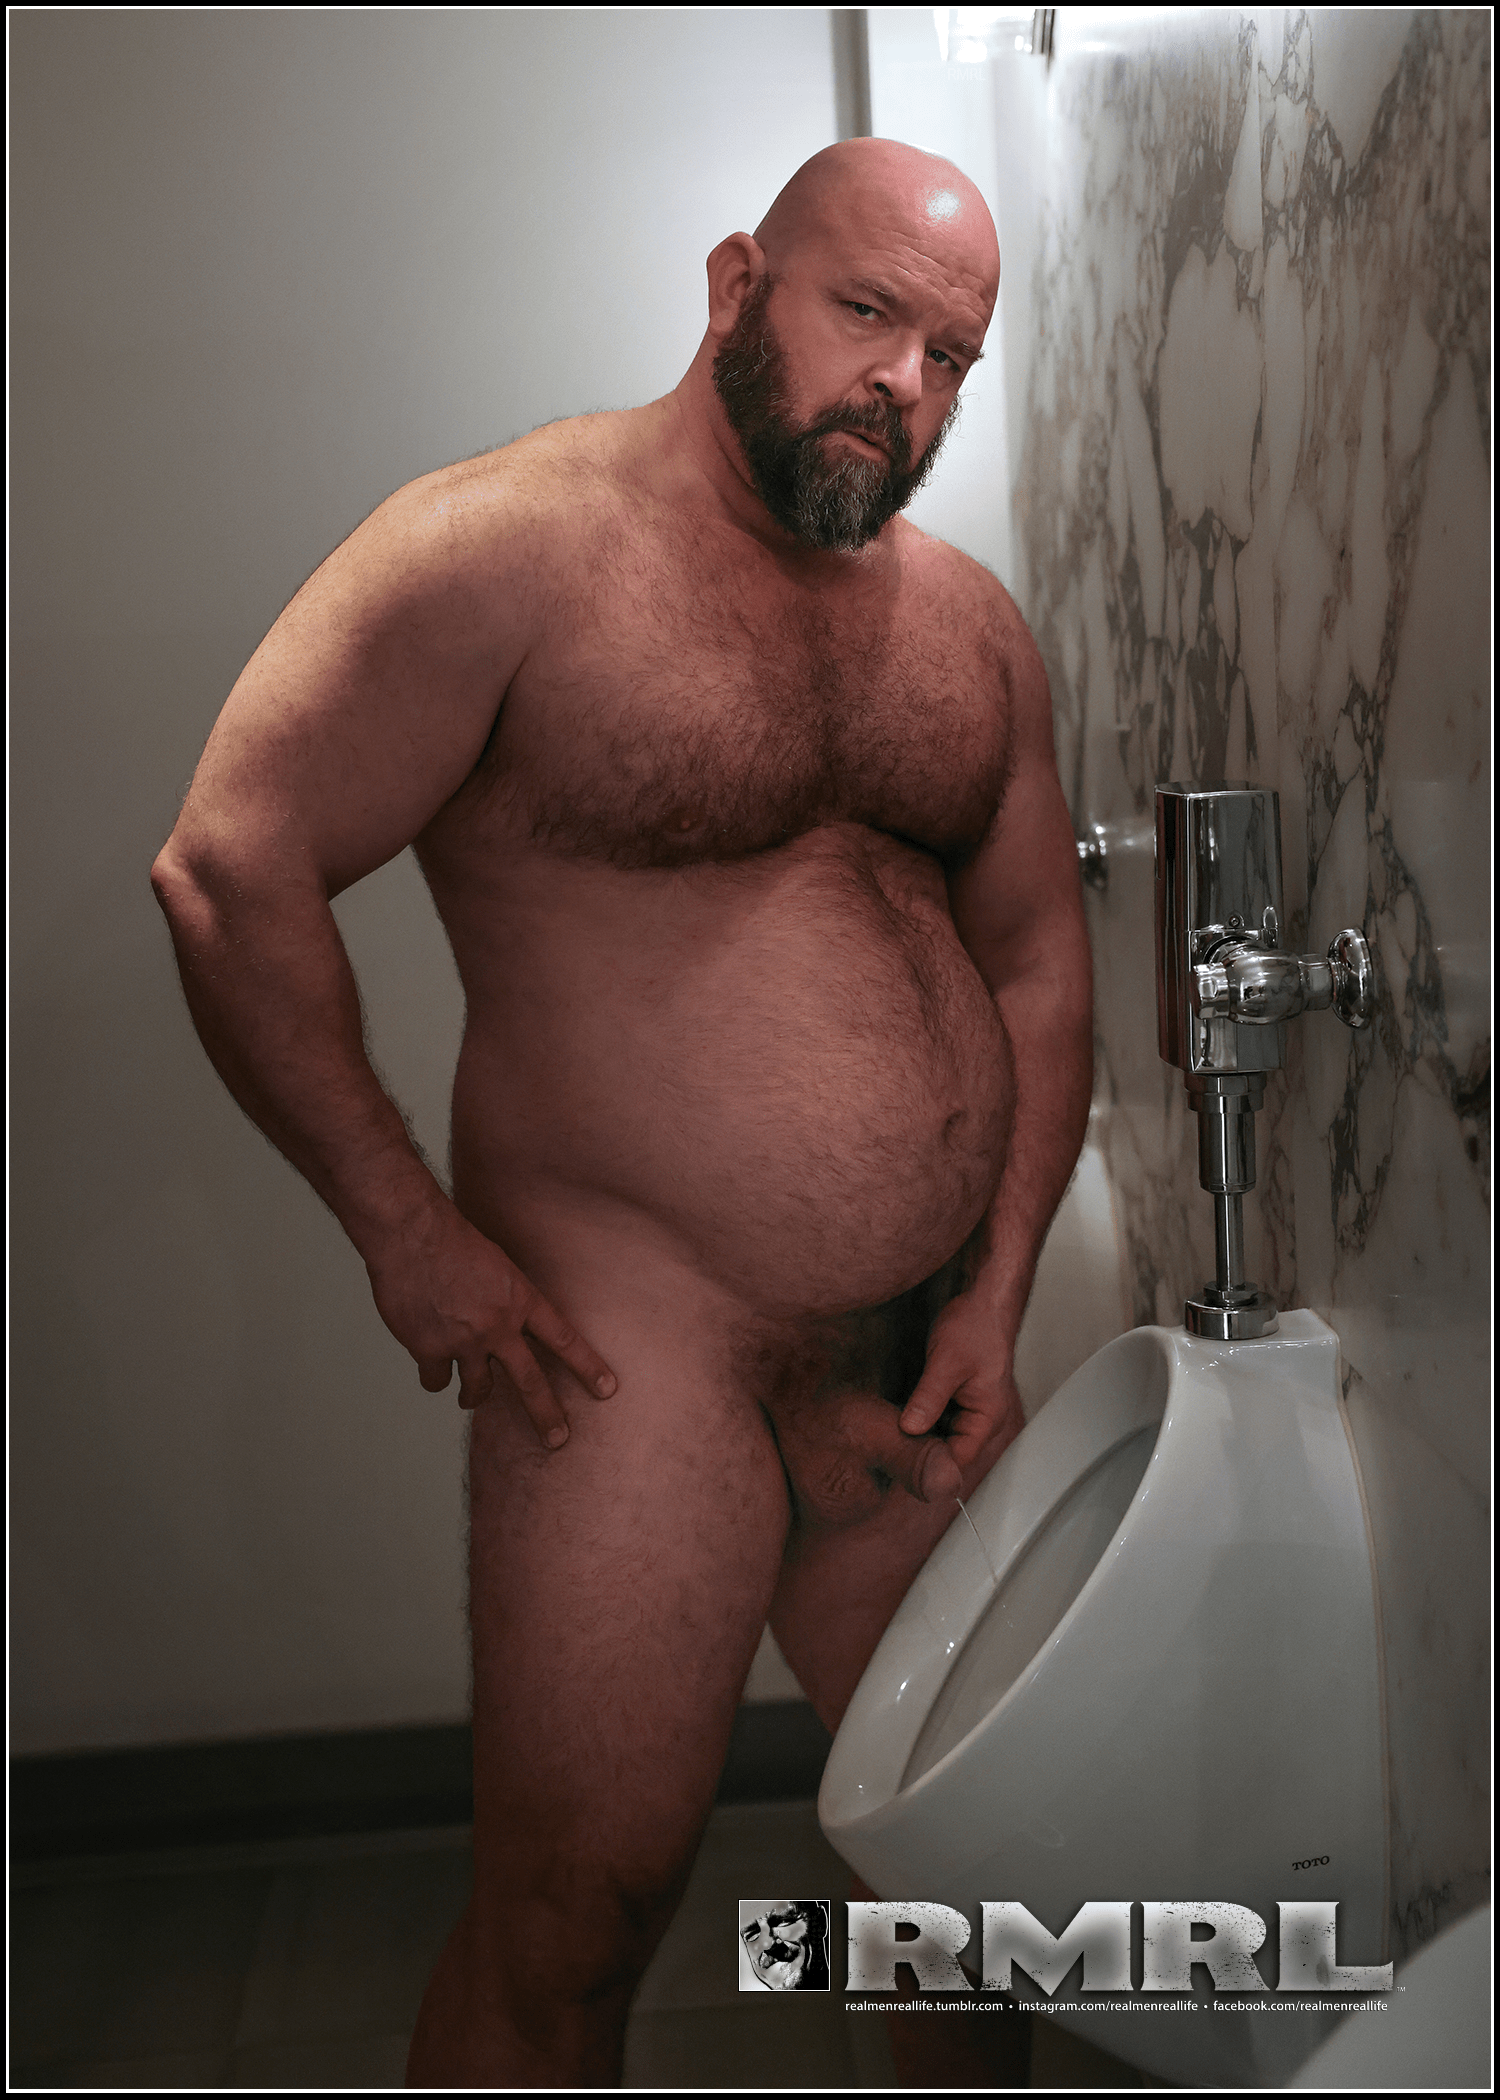 Photo by Ultra-Masculine-XXX with the username @Ultra-Masculine-XXX,  March 13, 2023 at 6:51 AM. The post is about the topic Gay Bears and the text says 'Steve #Steve #hairy #bear #beard'